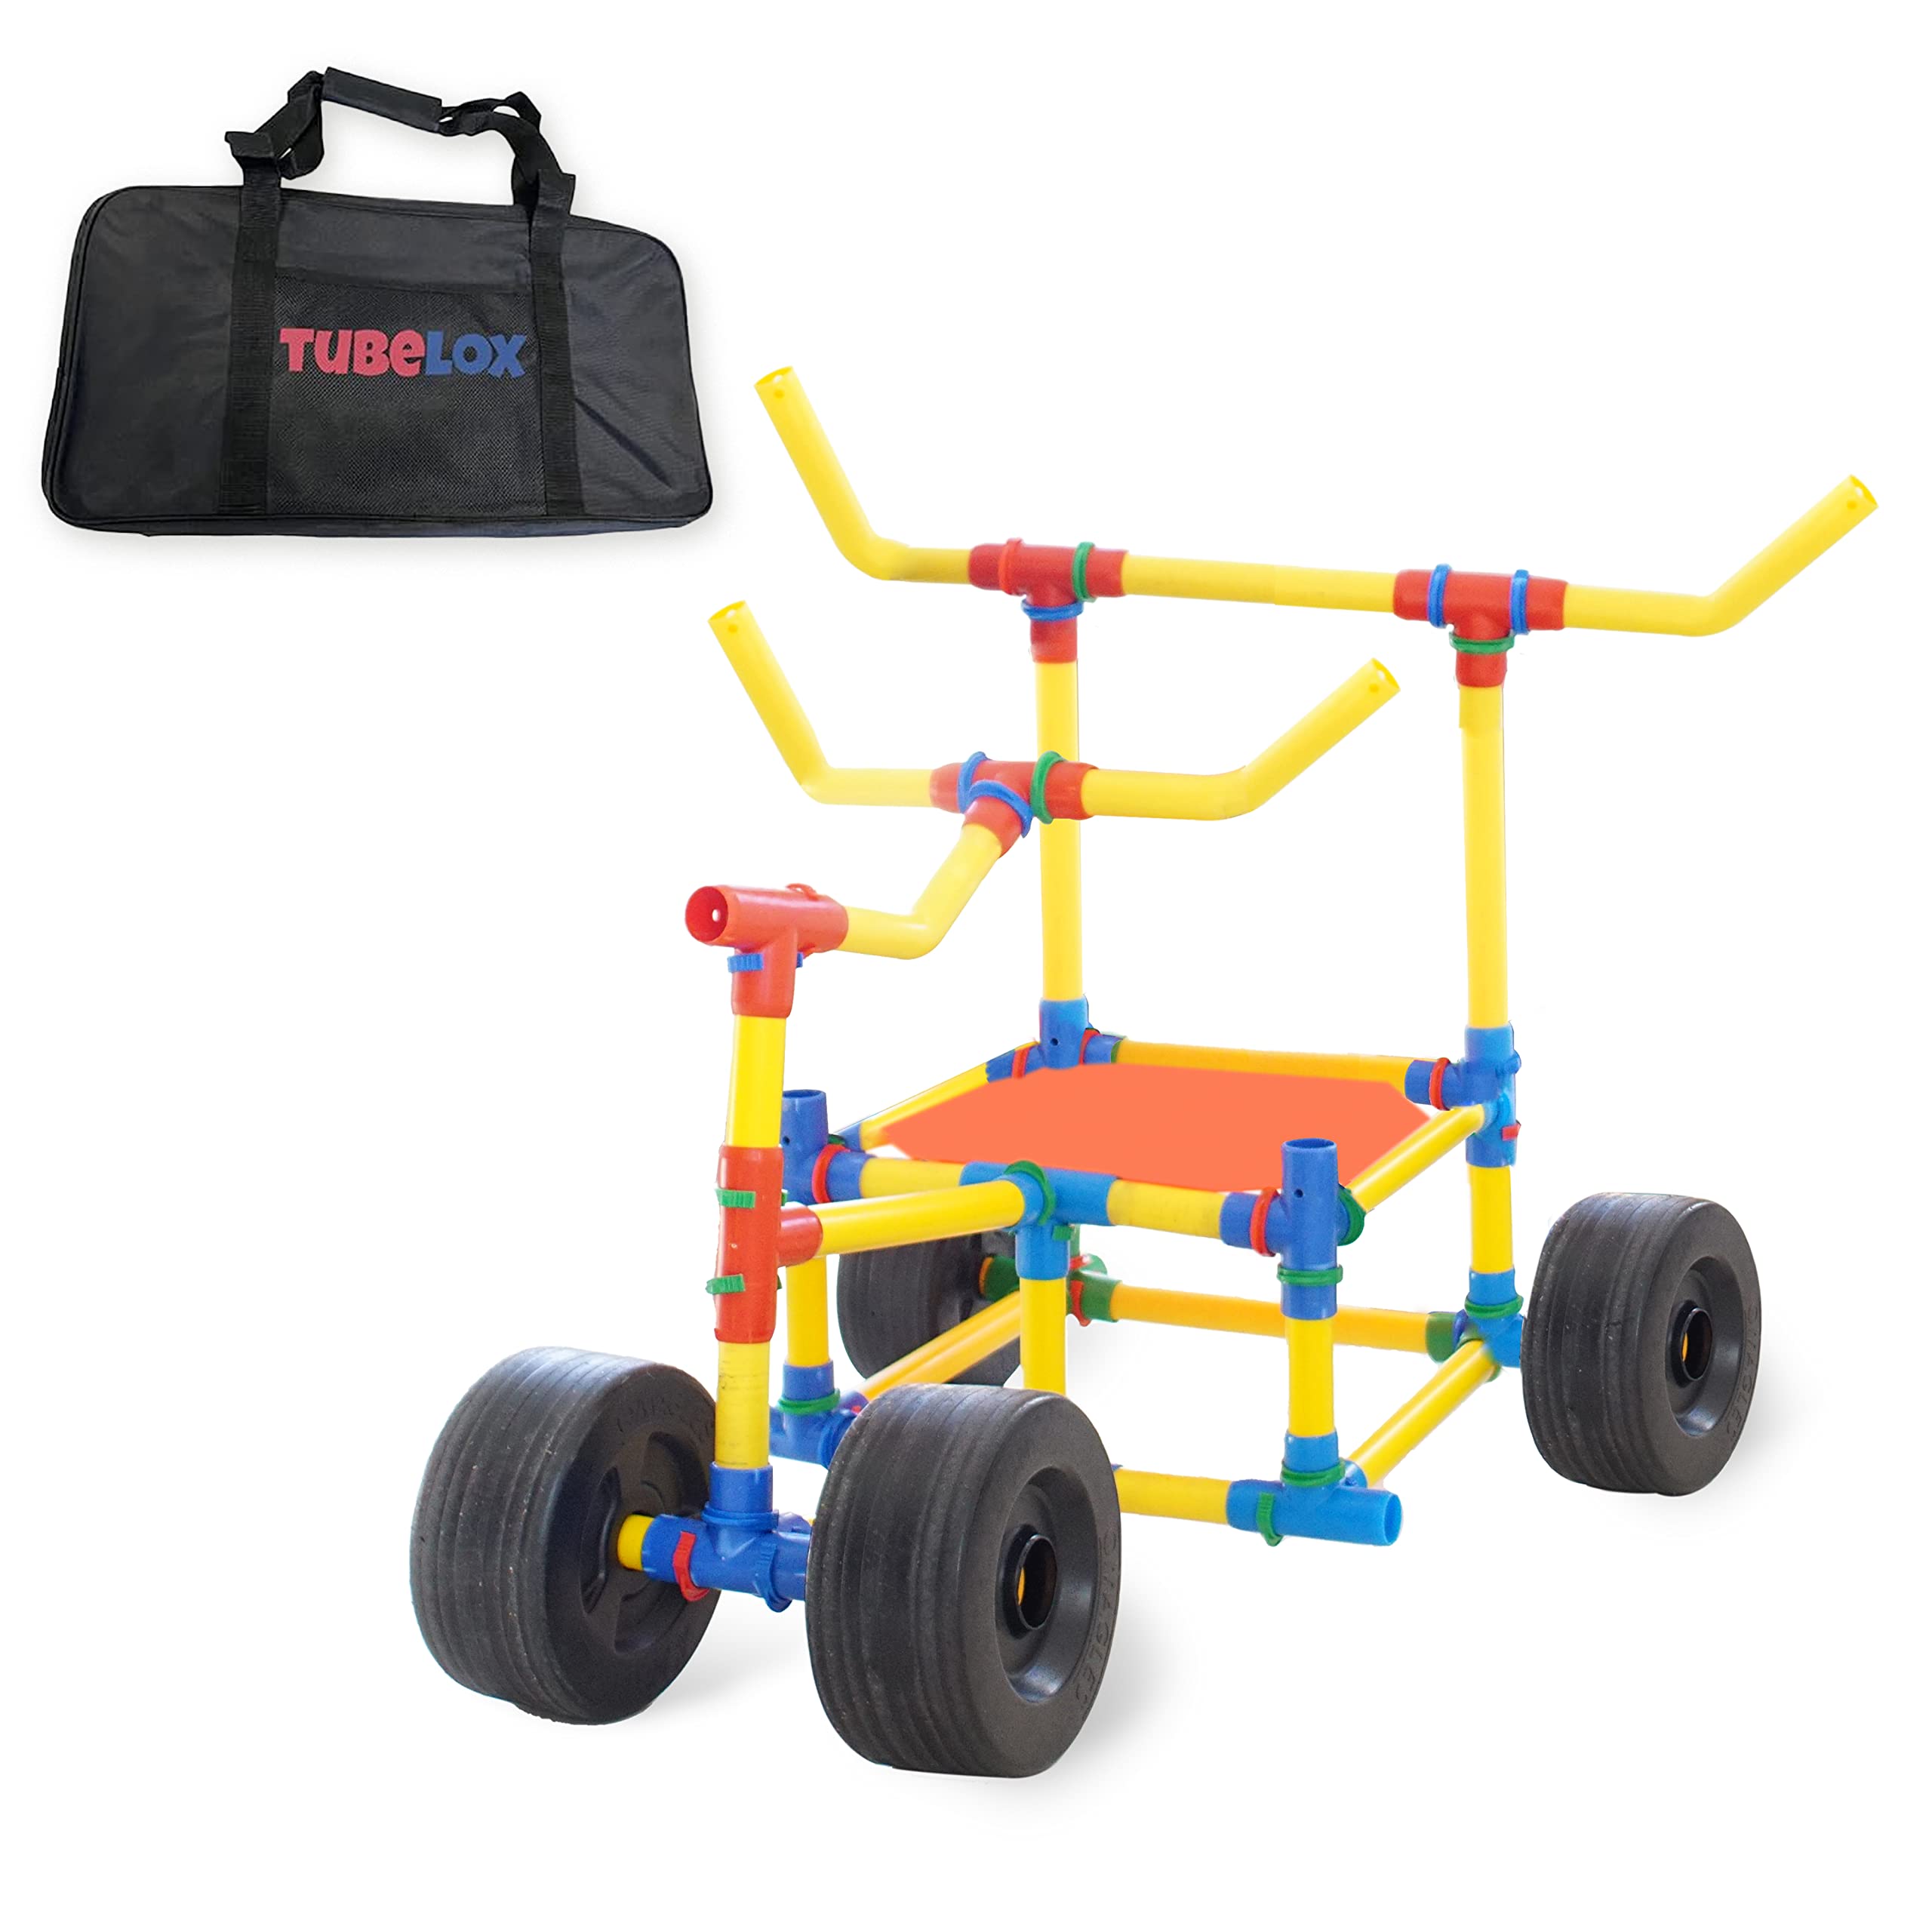 Tubelox Deluxe Building Toys Set - Kids STEM Toys for Development - 220 Piece Set w/ Storage Bag